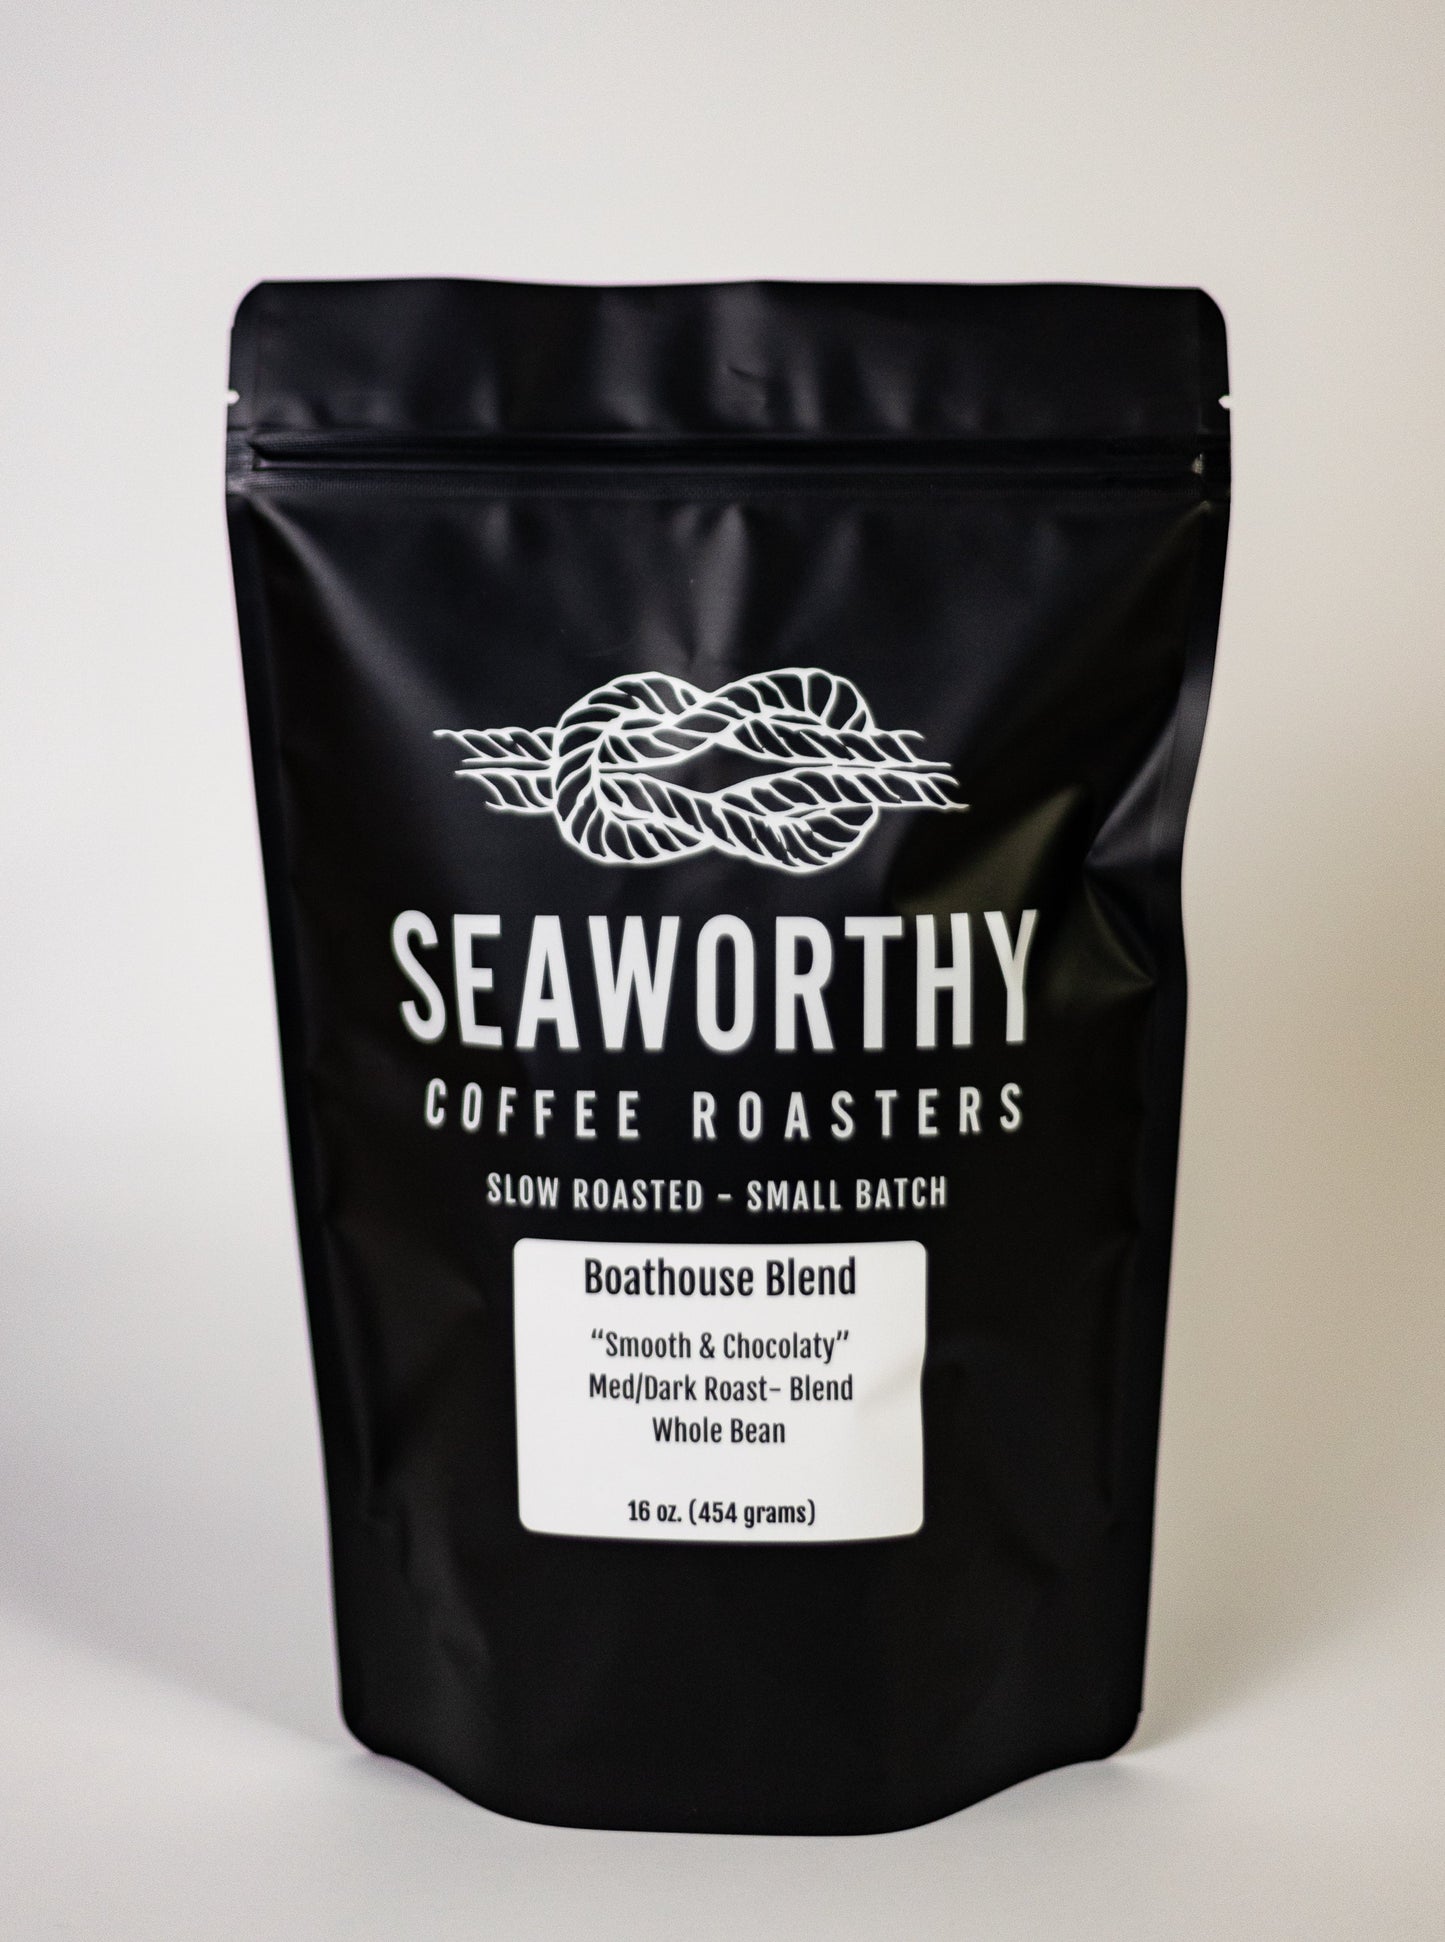 Seaworthy slow roasted, small batch, low acid coffee. 1 pound bag of Boathouse Blend medium dark roast coffee.